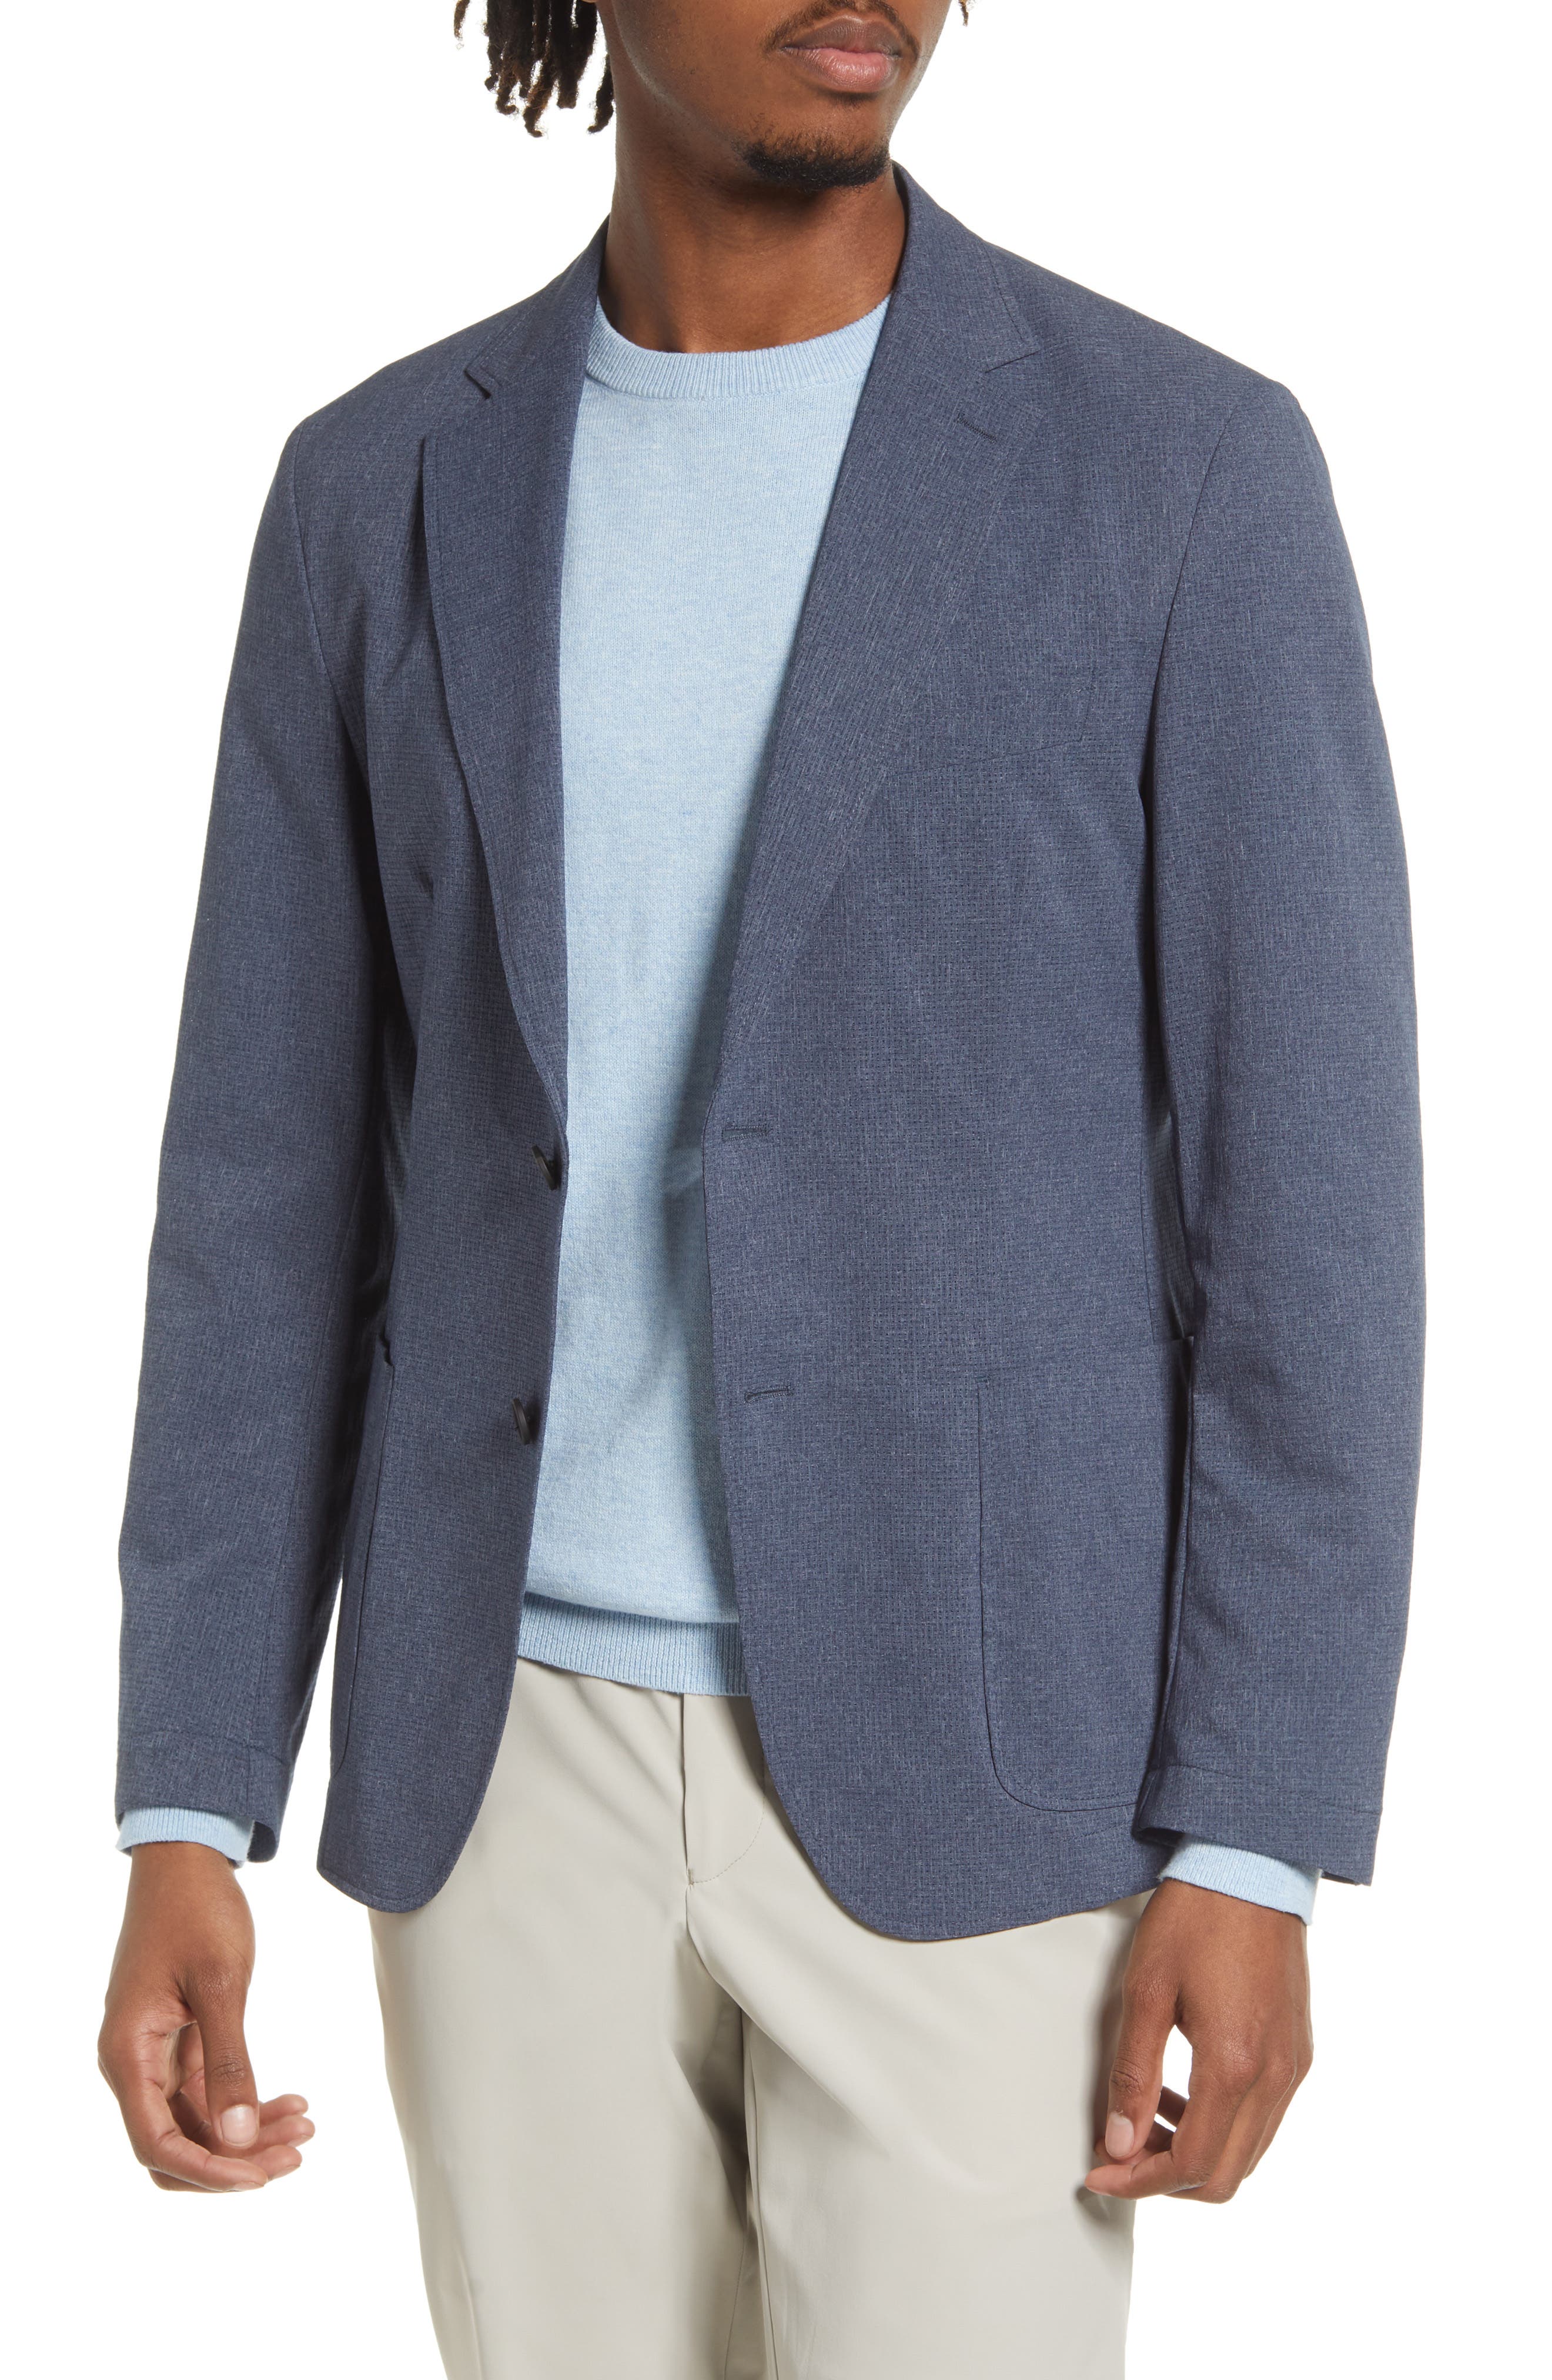 Men's Tommy Hilfiger Zip Casual Jacket Baseball Youth Trend Outwear Coat Fit